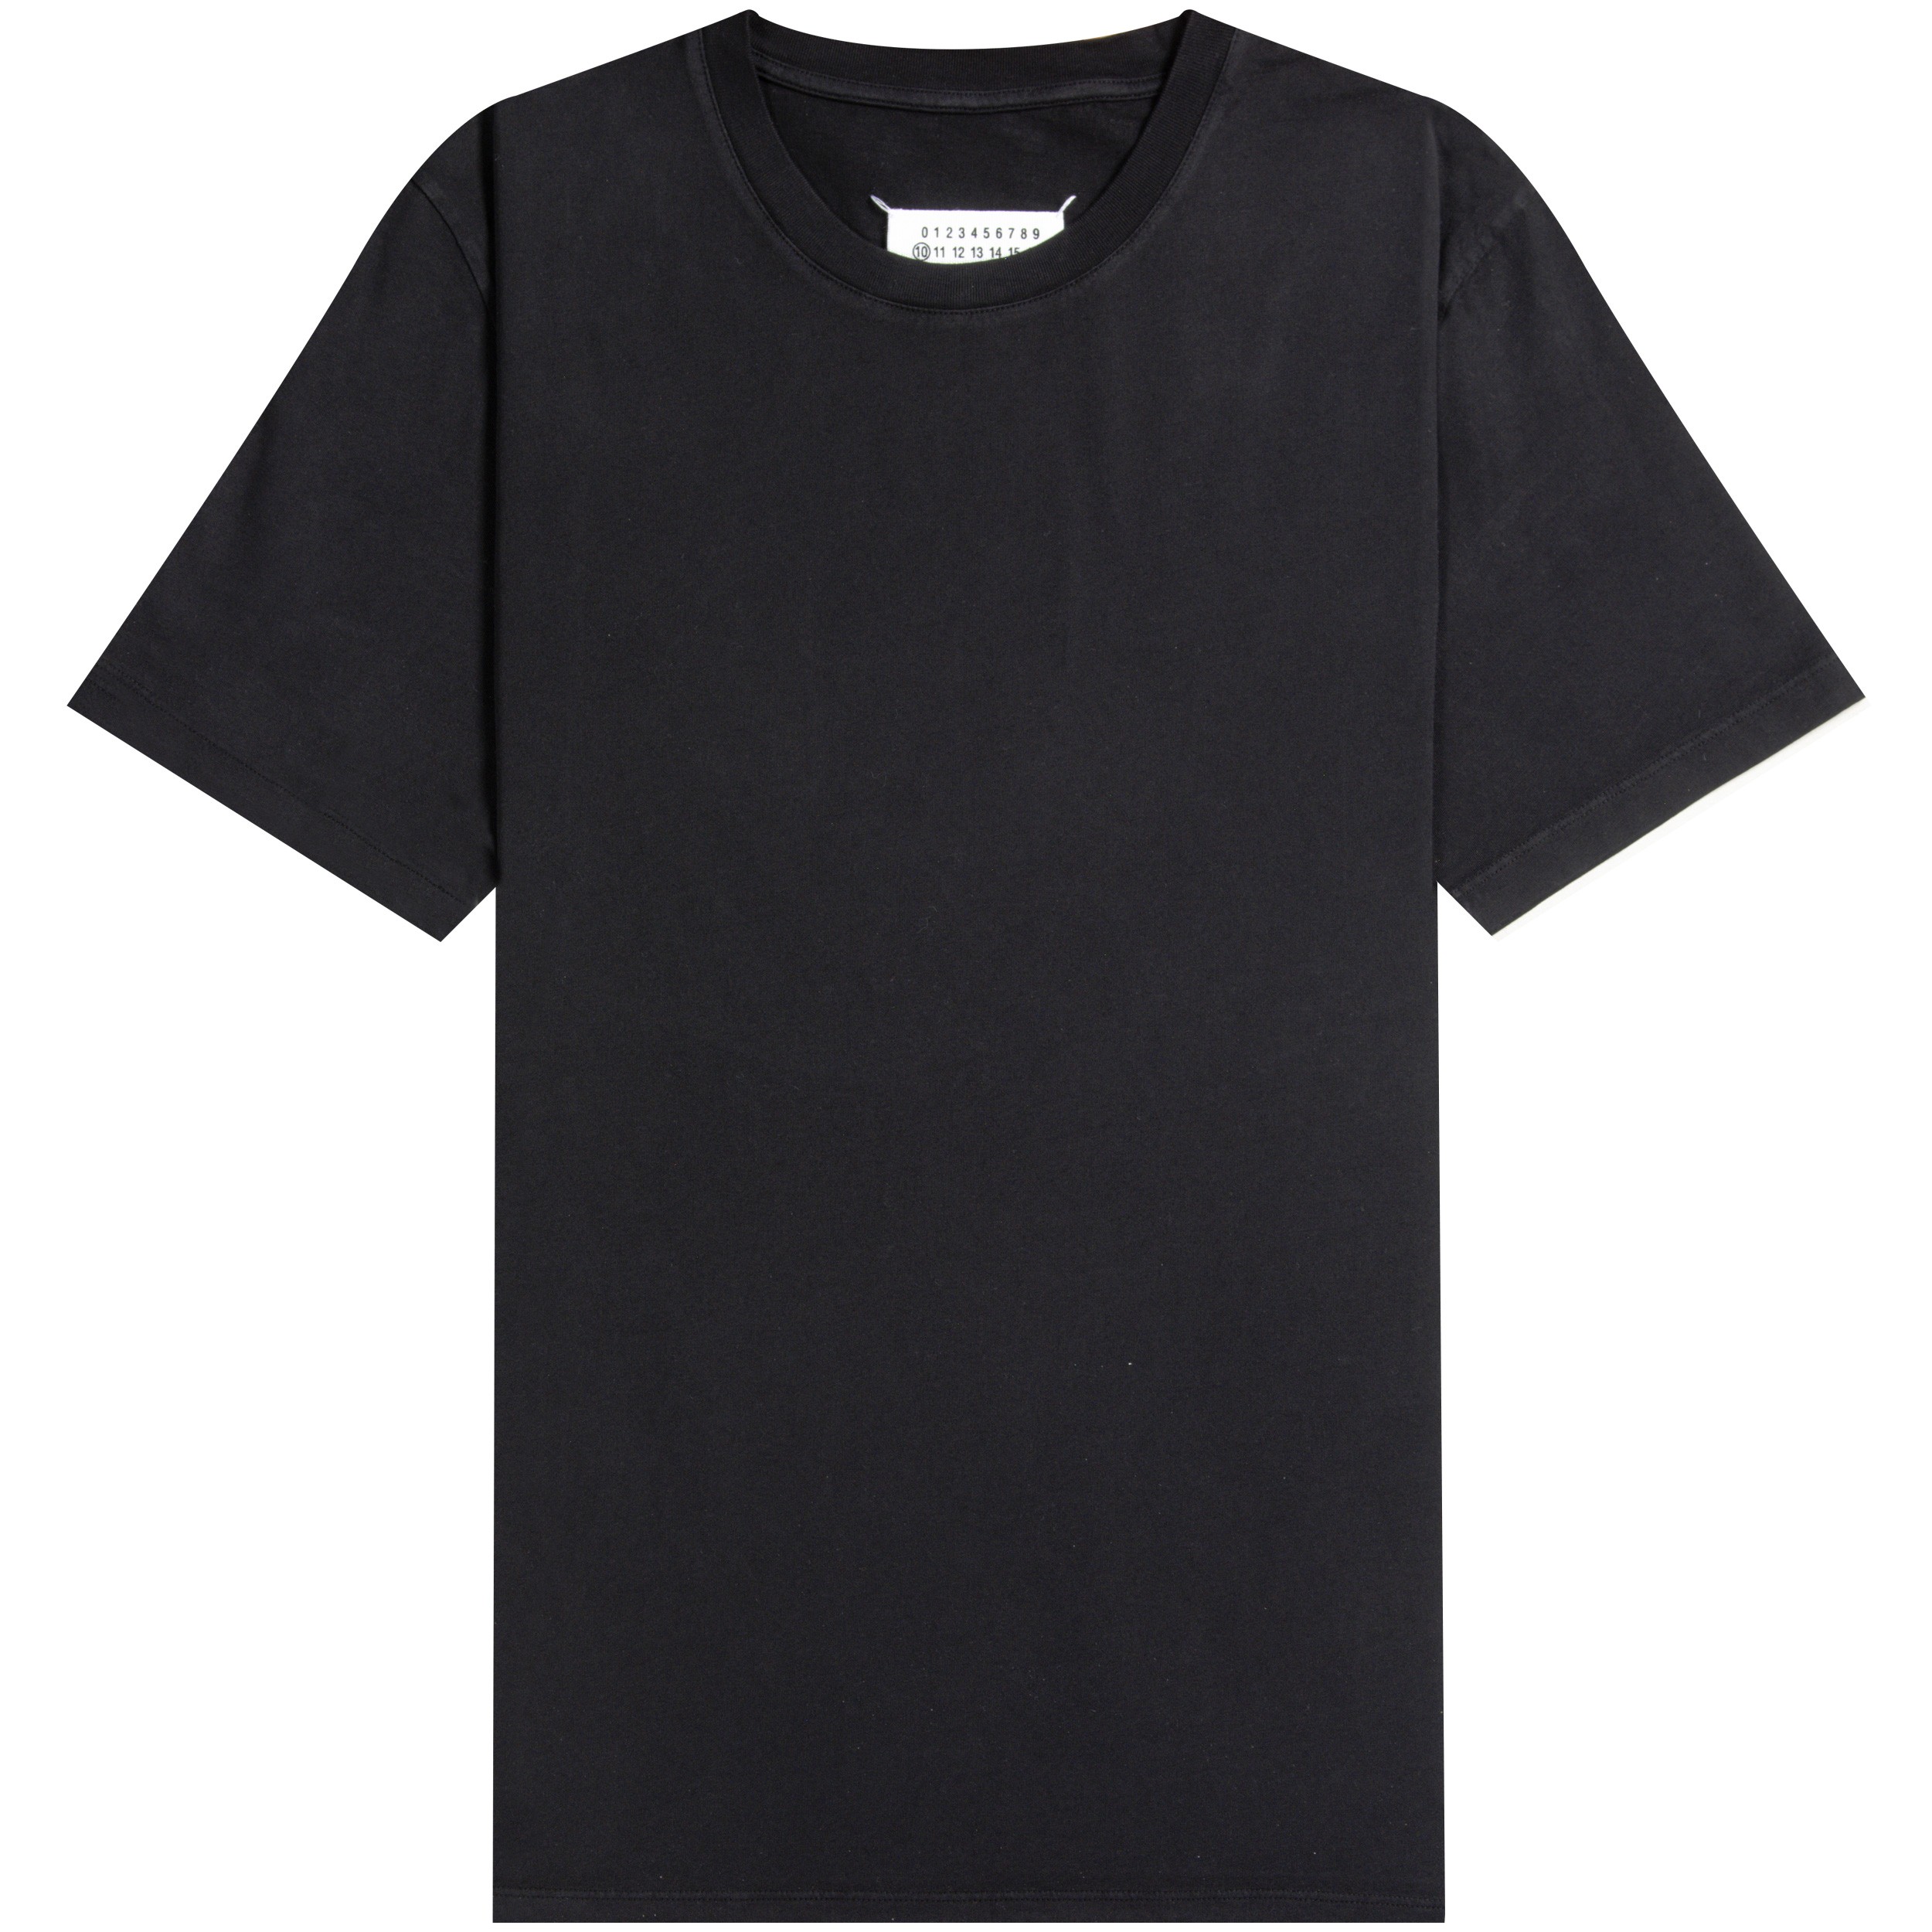 Maison Margiela T Shirt Black Hot Sale | website.jkuat.ac.ke